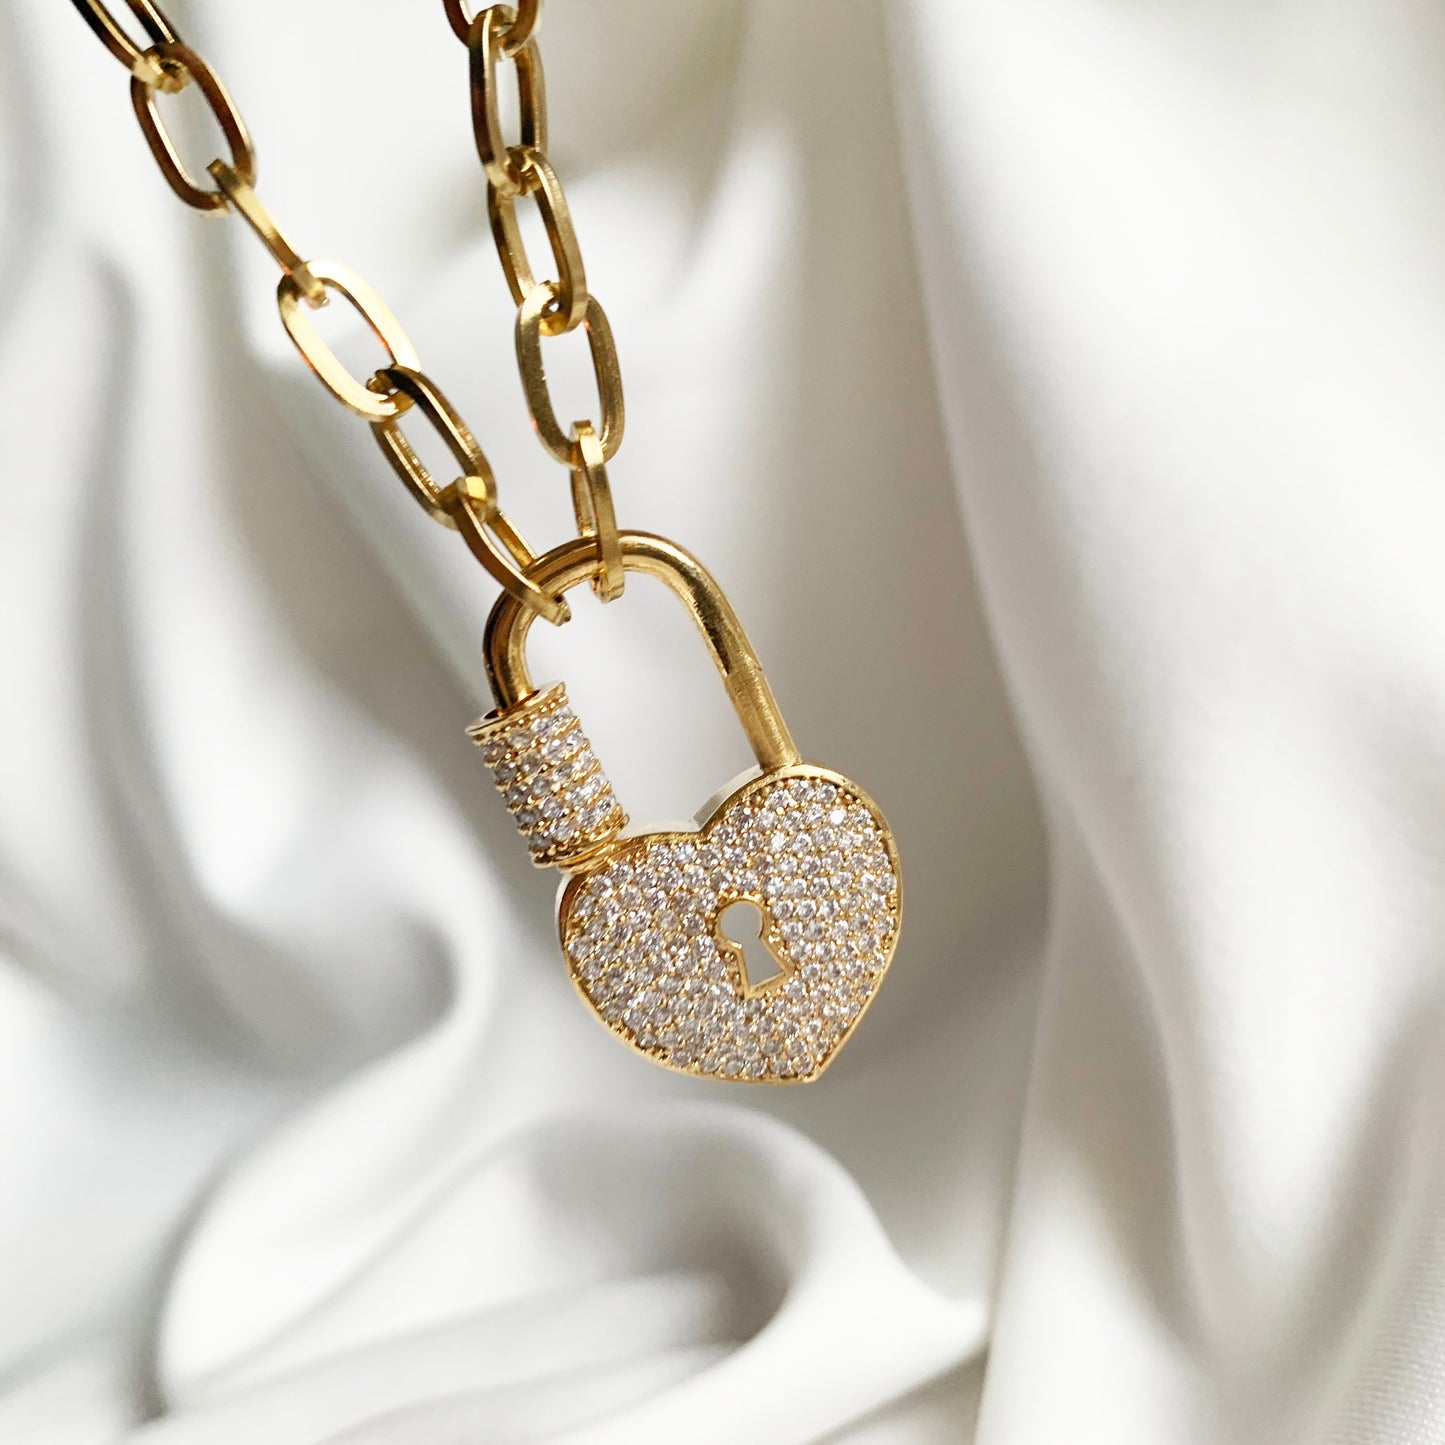 Heart Lock - Golden Necklace